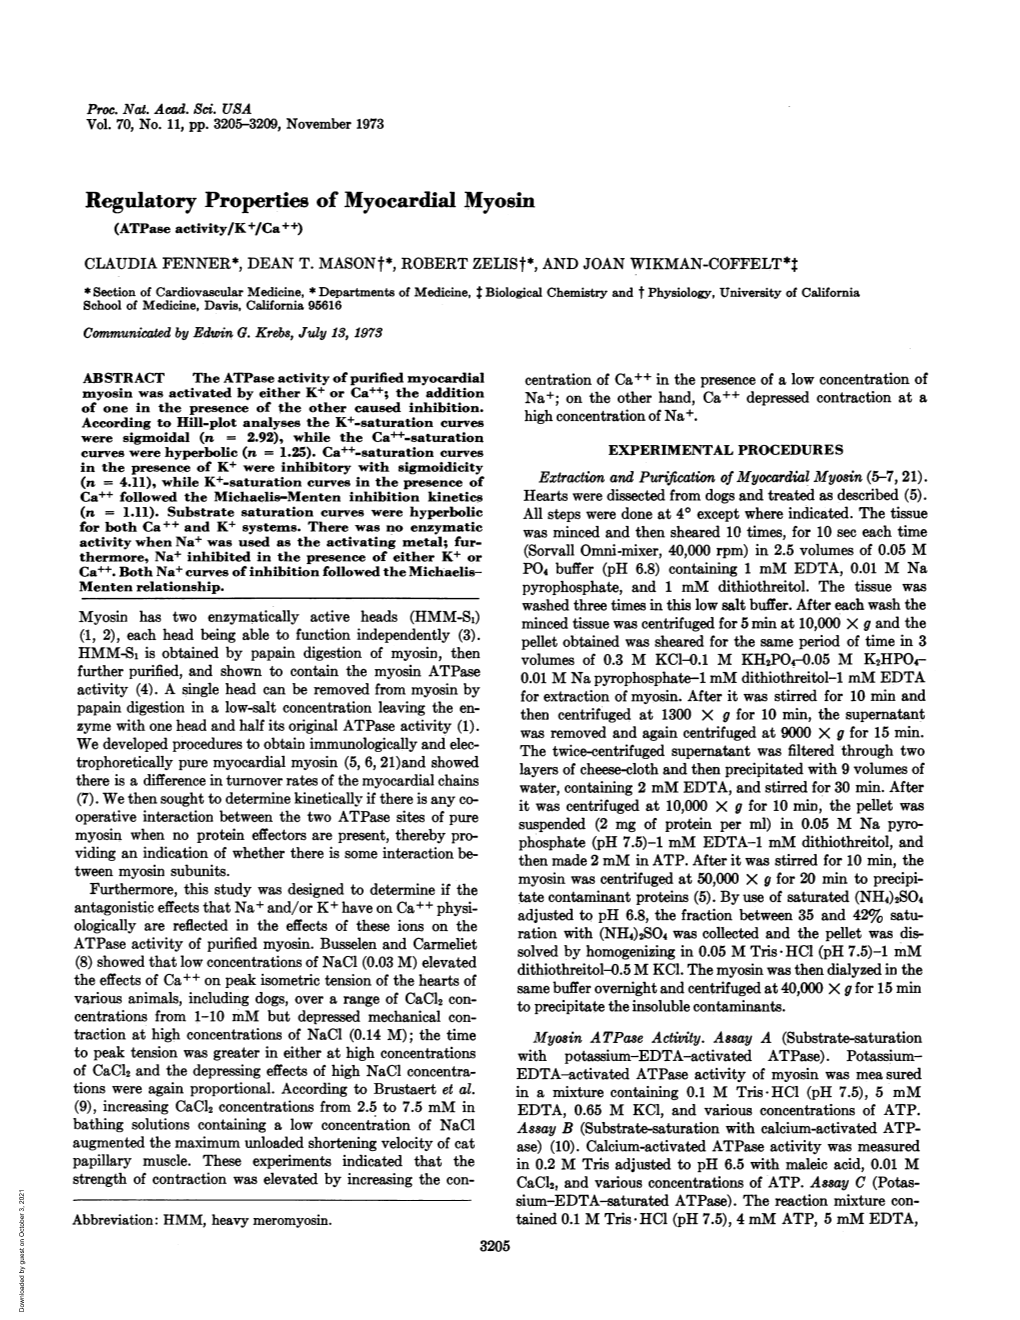 Regulatory Properties of Myocardial Myosin (Atpase Activity/K +/Ca++) CLAUDIA FENNER*, DEAN T